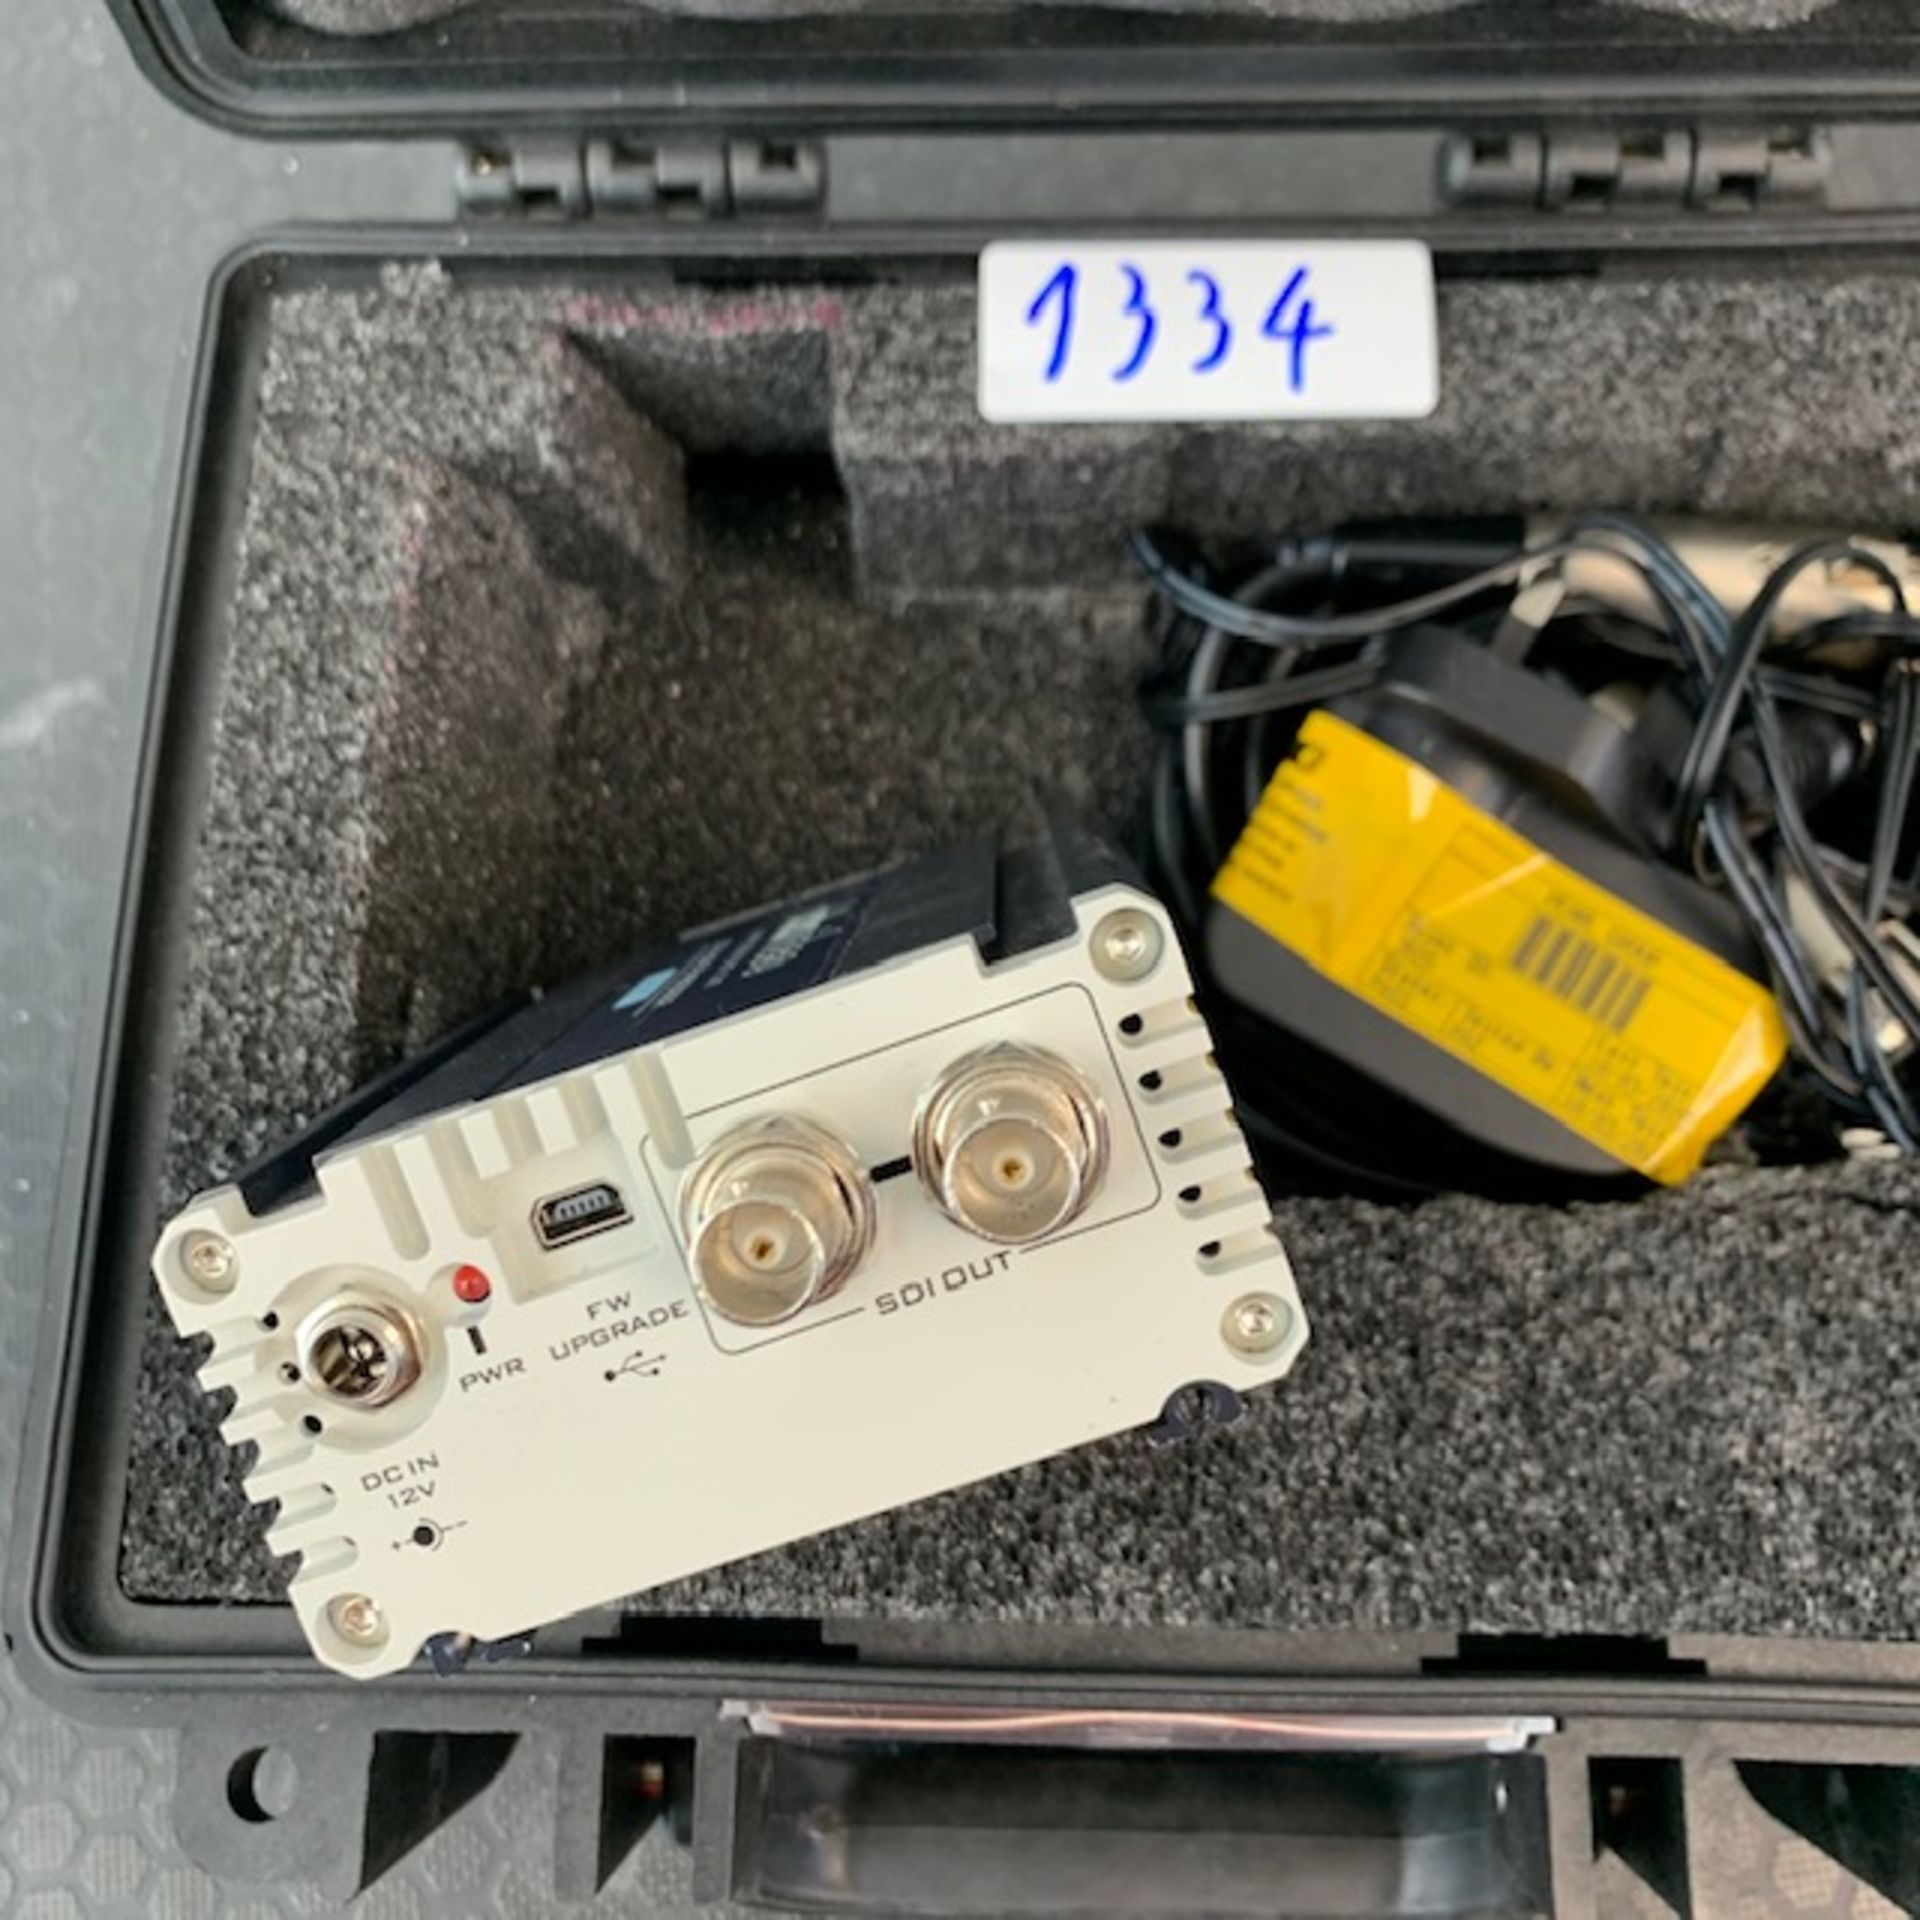 1 X Datavideo DAC-91 Sdi Audio Embedder In Stagg Case - Ref: 1334 - CL581 - Location: Altrincham - Image 2 of 3